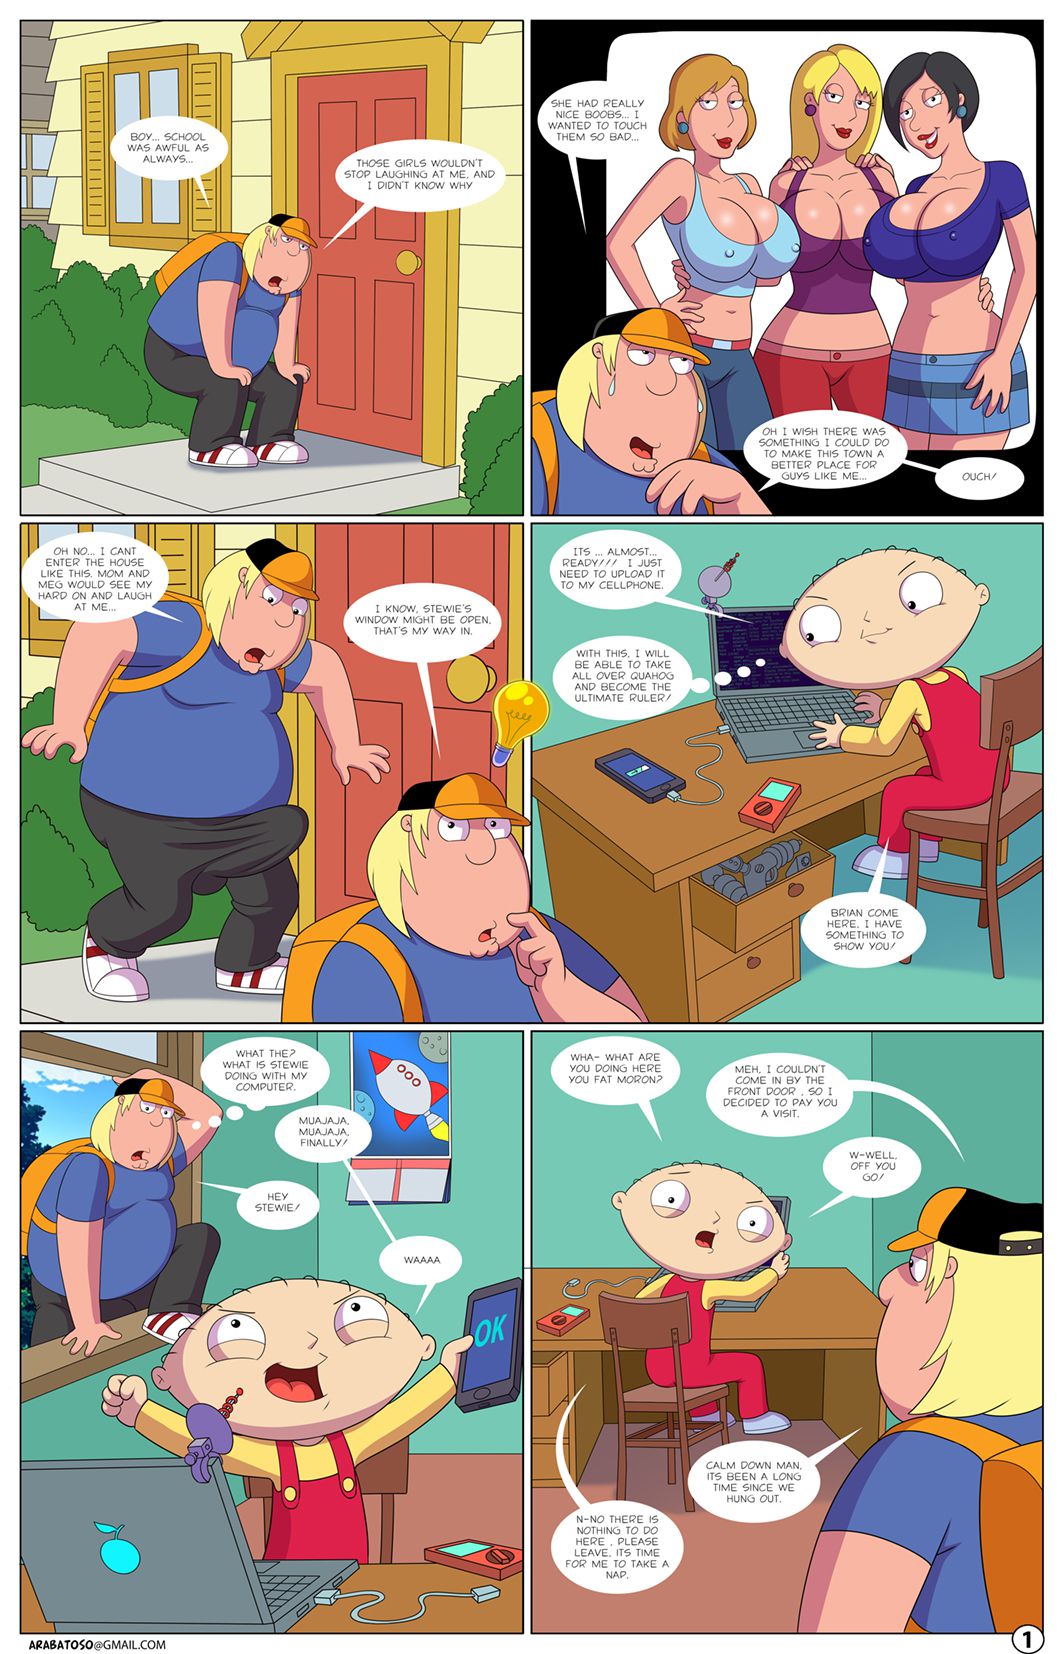 Double Penetration Cartoon Family Guy - Quahog Diaries (Family Guy) [Arabatos] - 1-2 - Porn Cartoon Comics